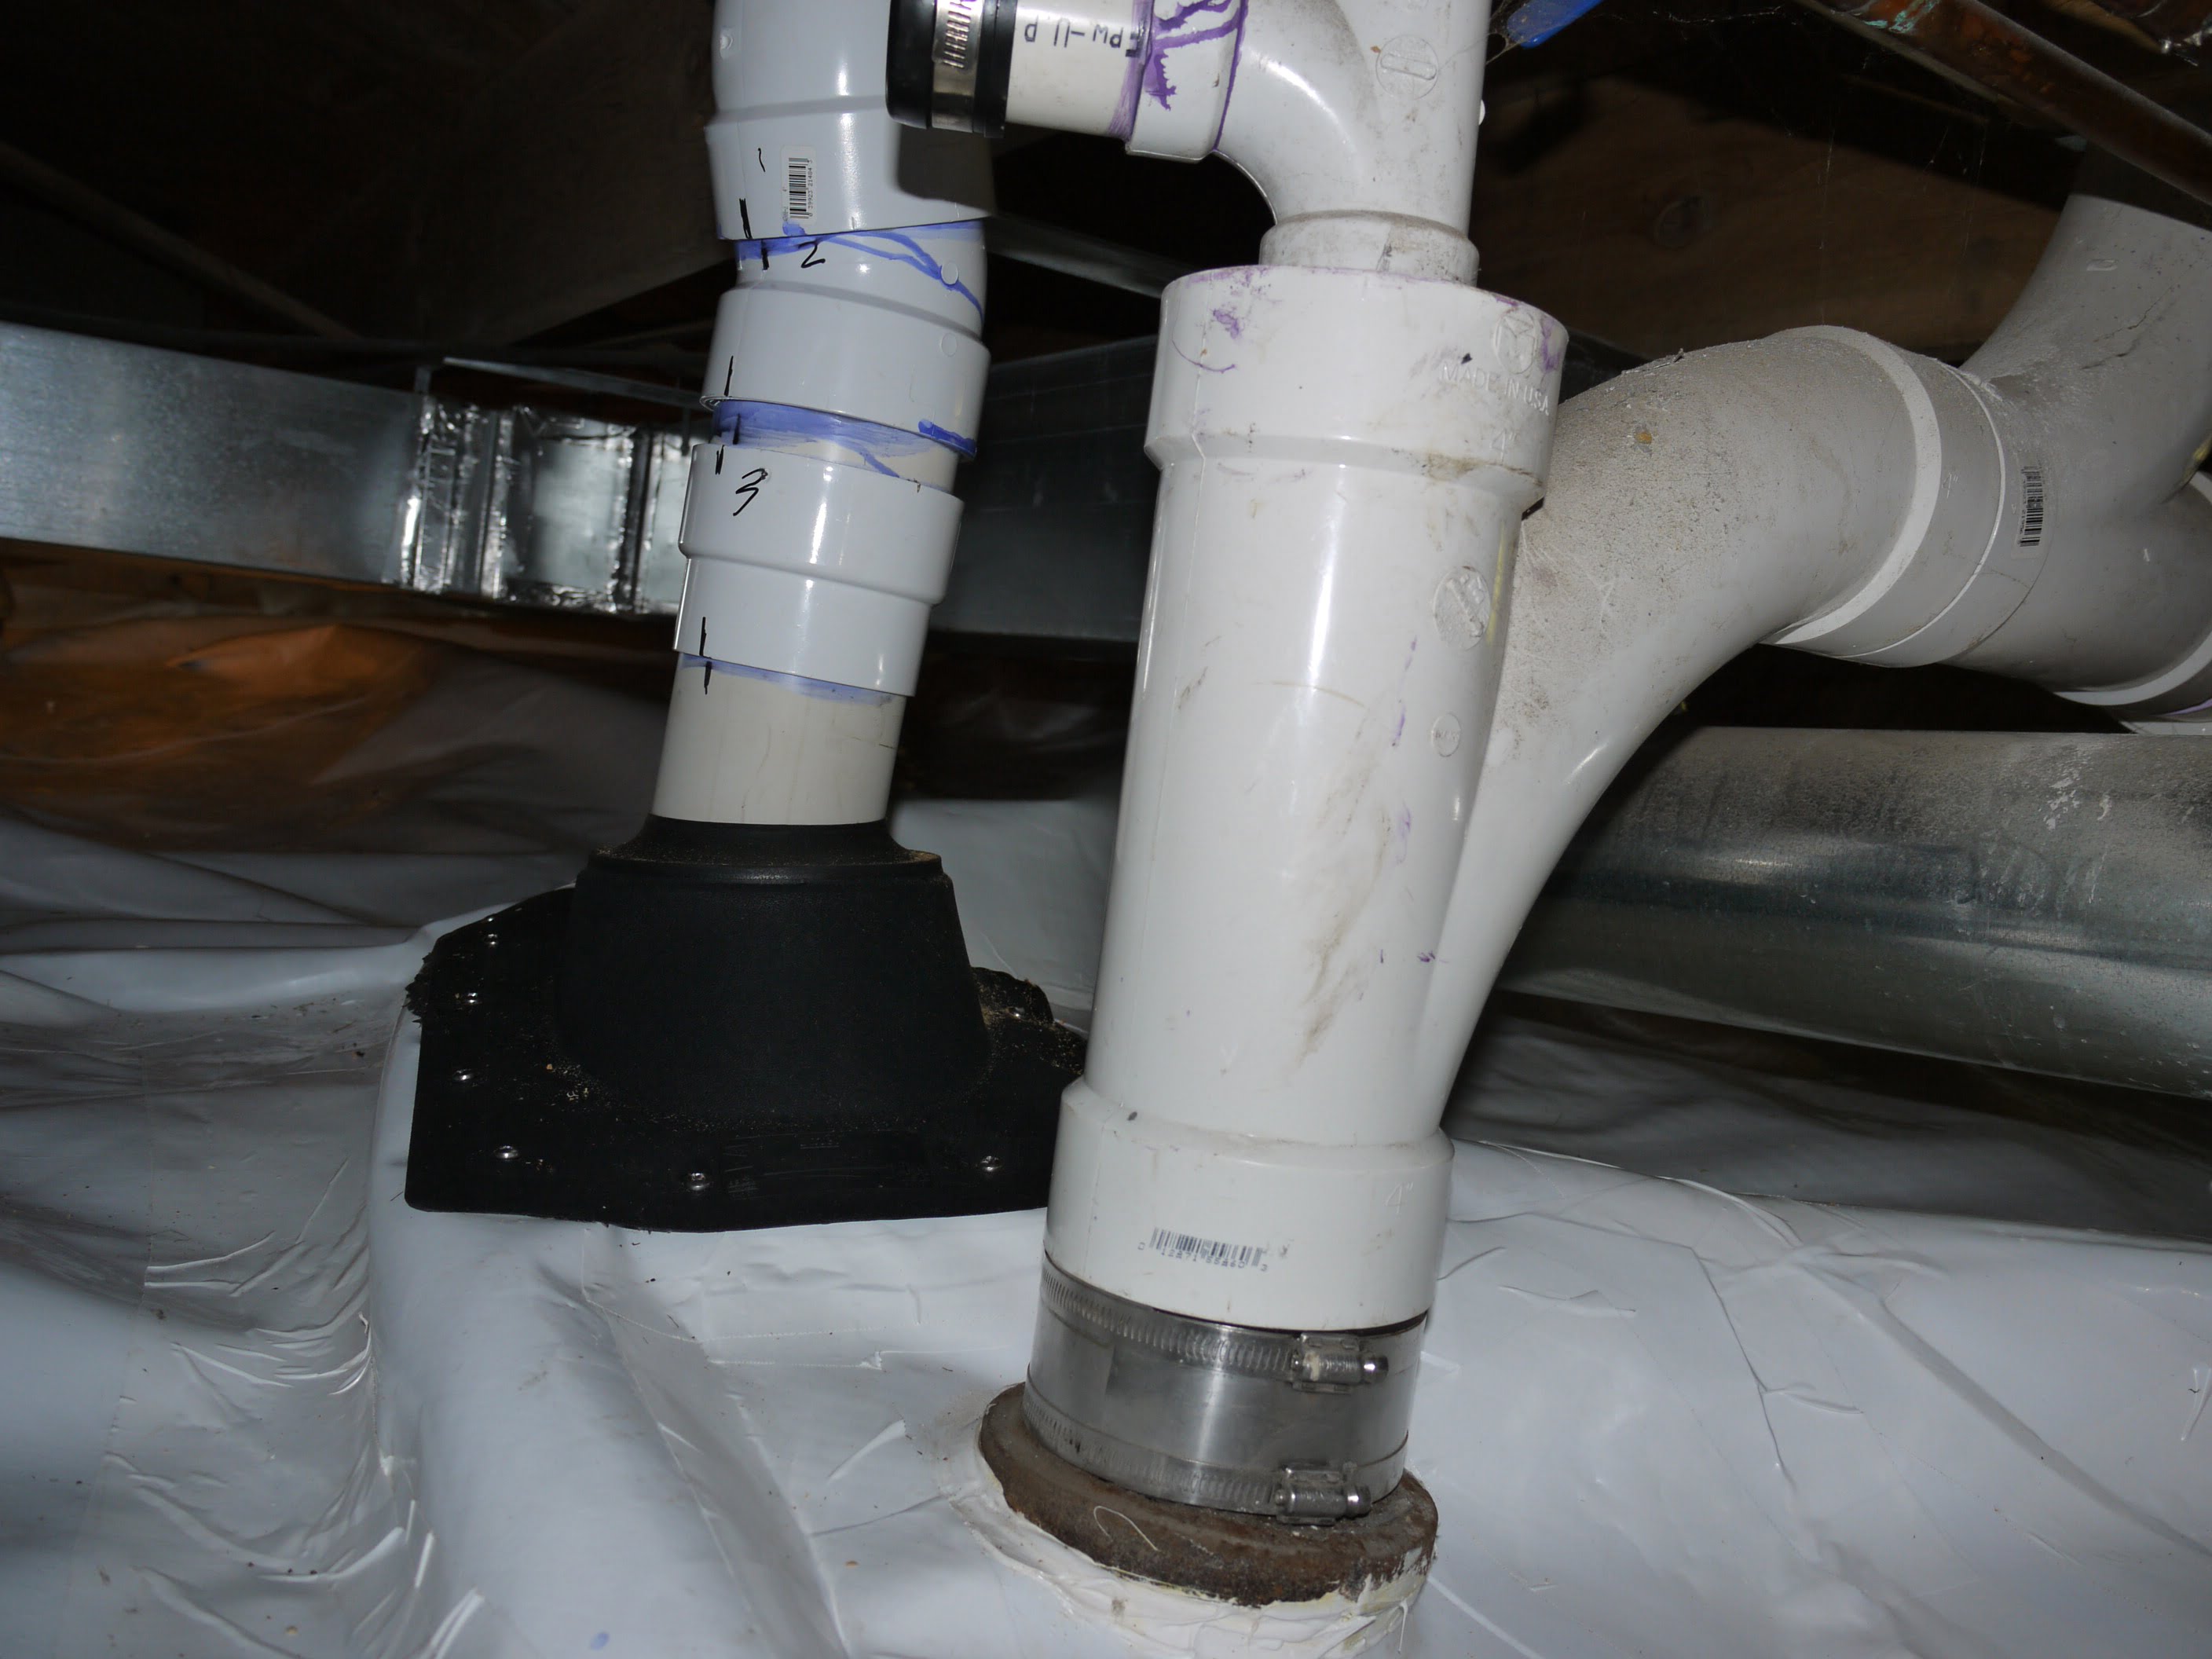 Penetrations through vapor barrier can be sealed with polyurethane caulk.